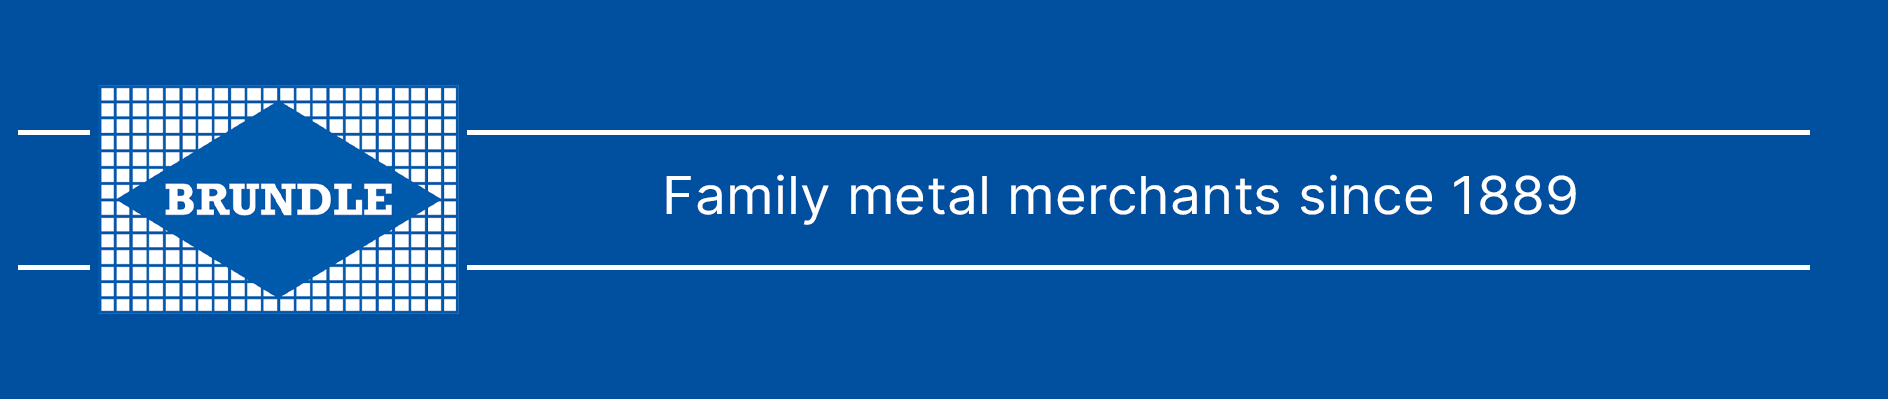 Family metal merchants since 1889